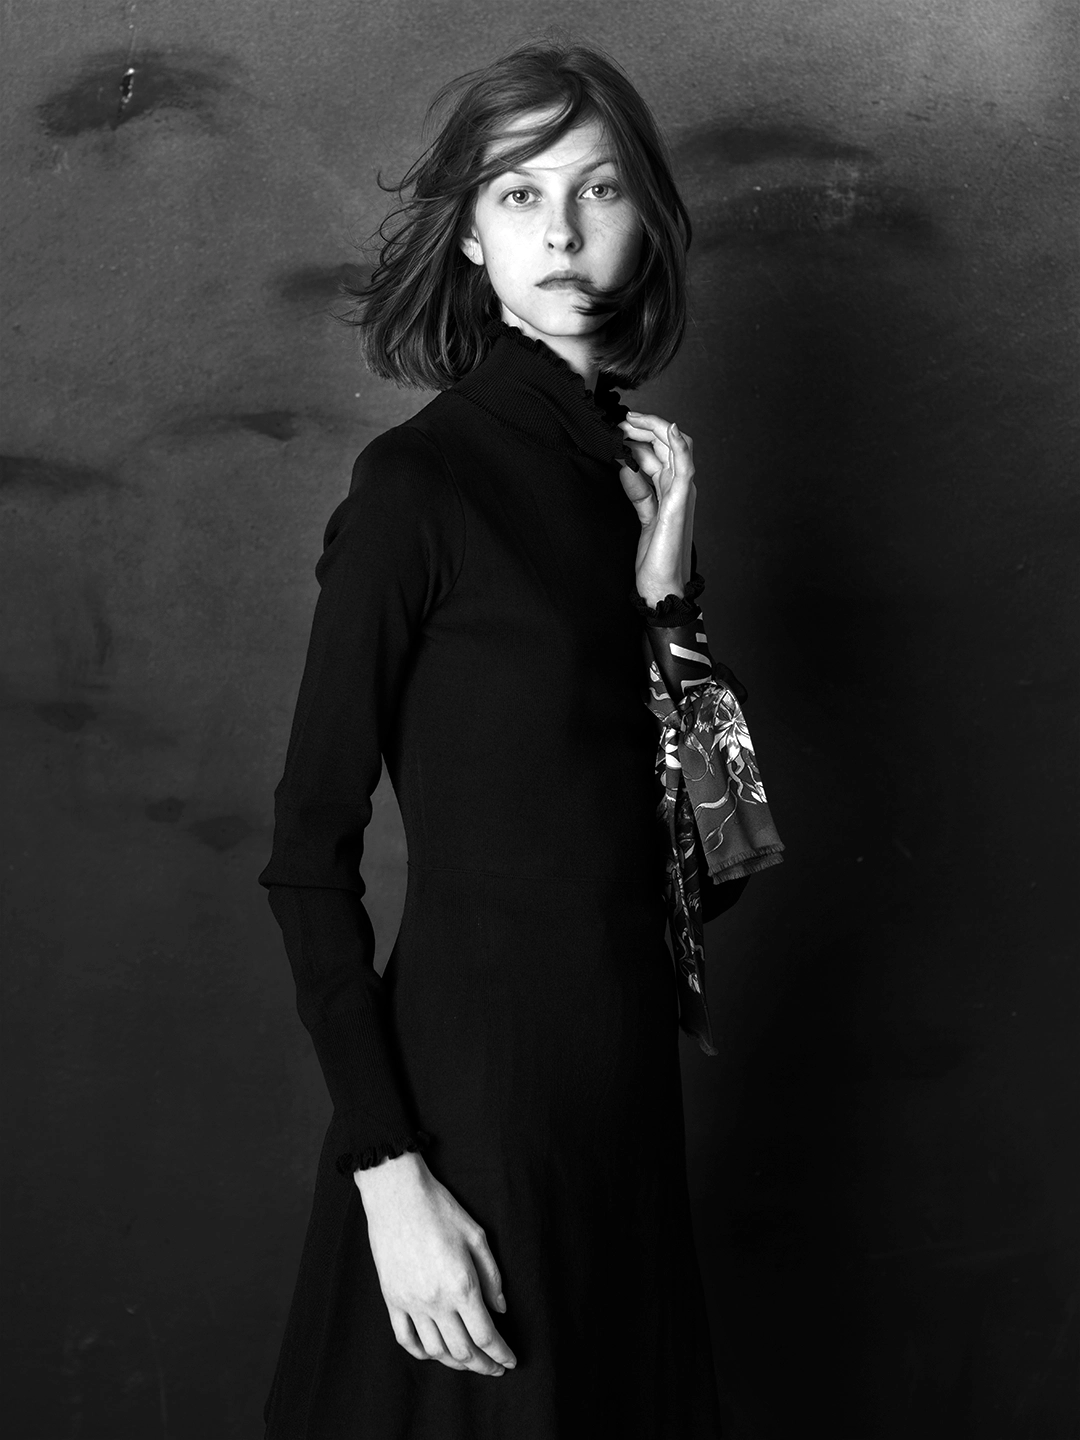 Fashion photograph of a female model in monochrome